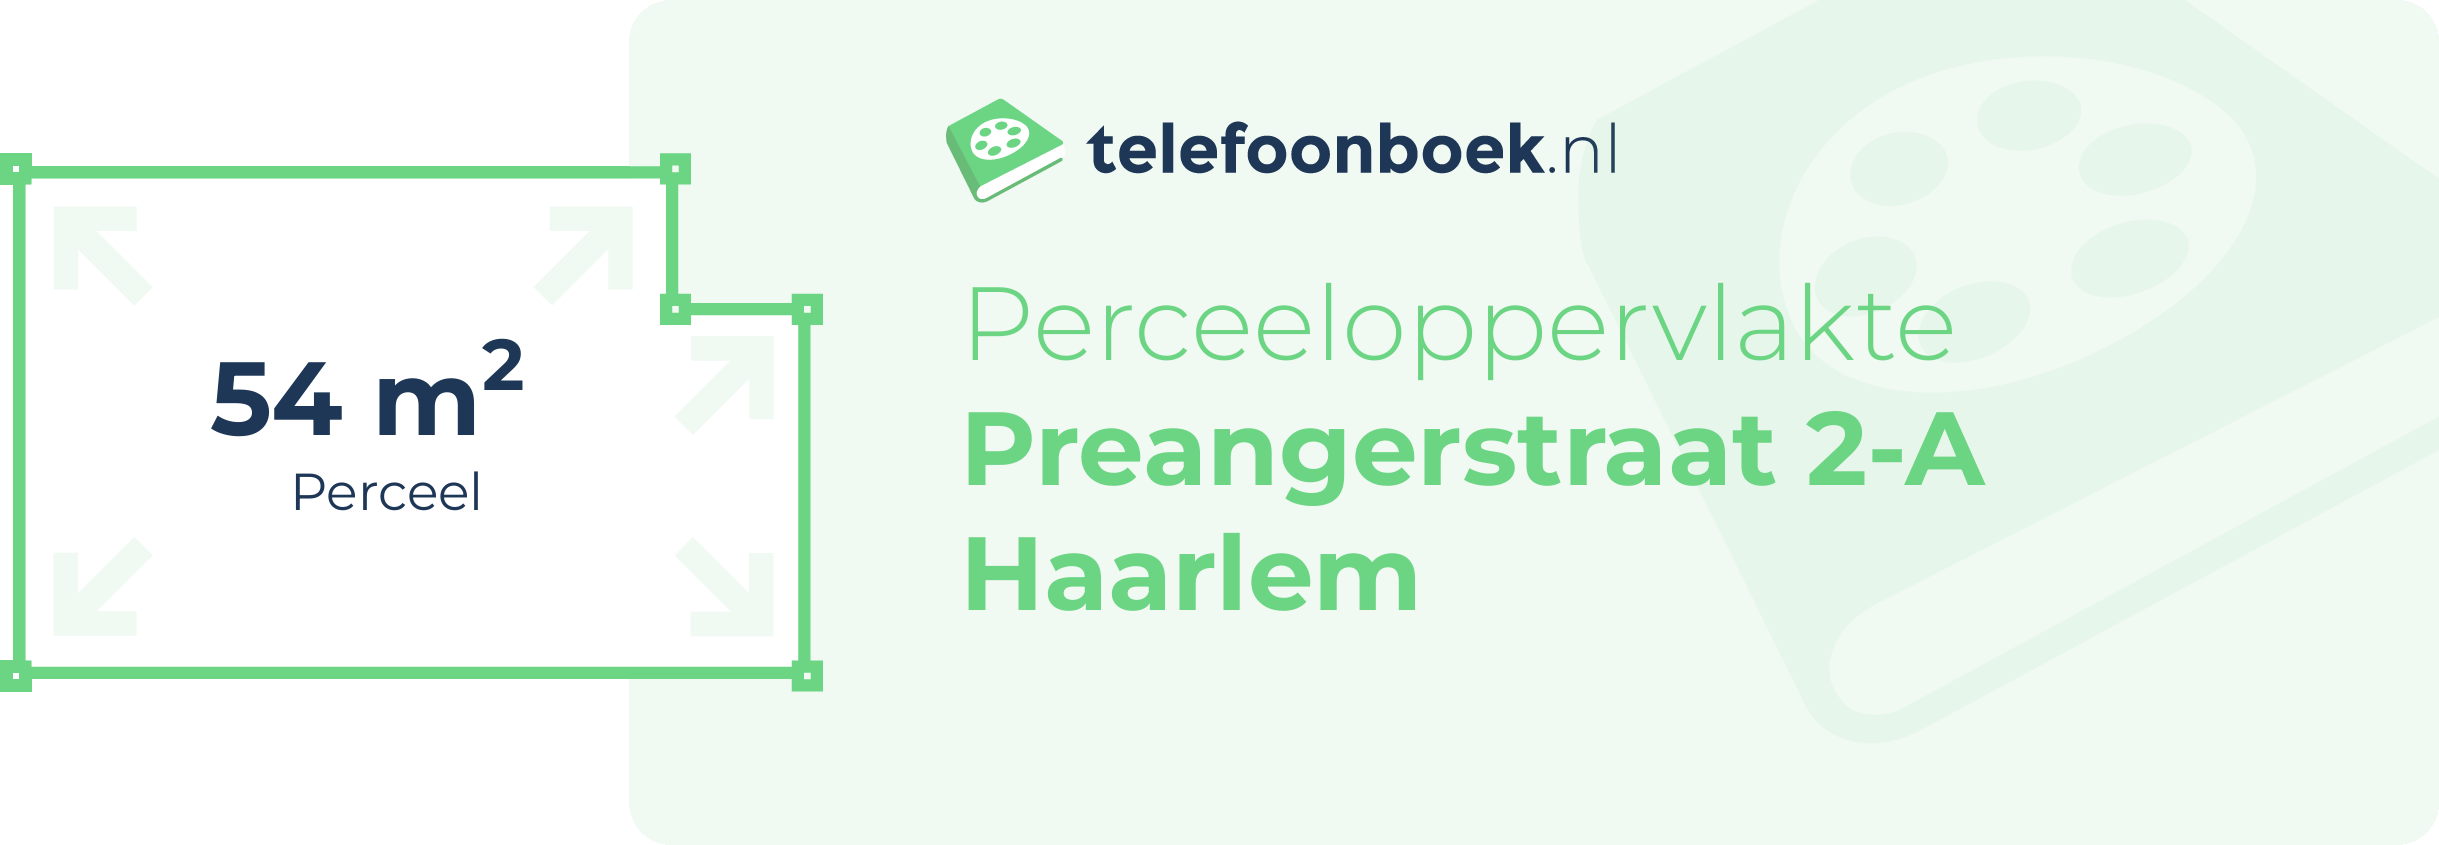 Perceeloppervlakte Preangerstraat 2-A Haarlem